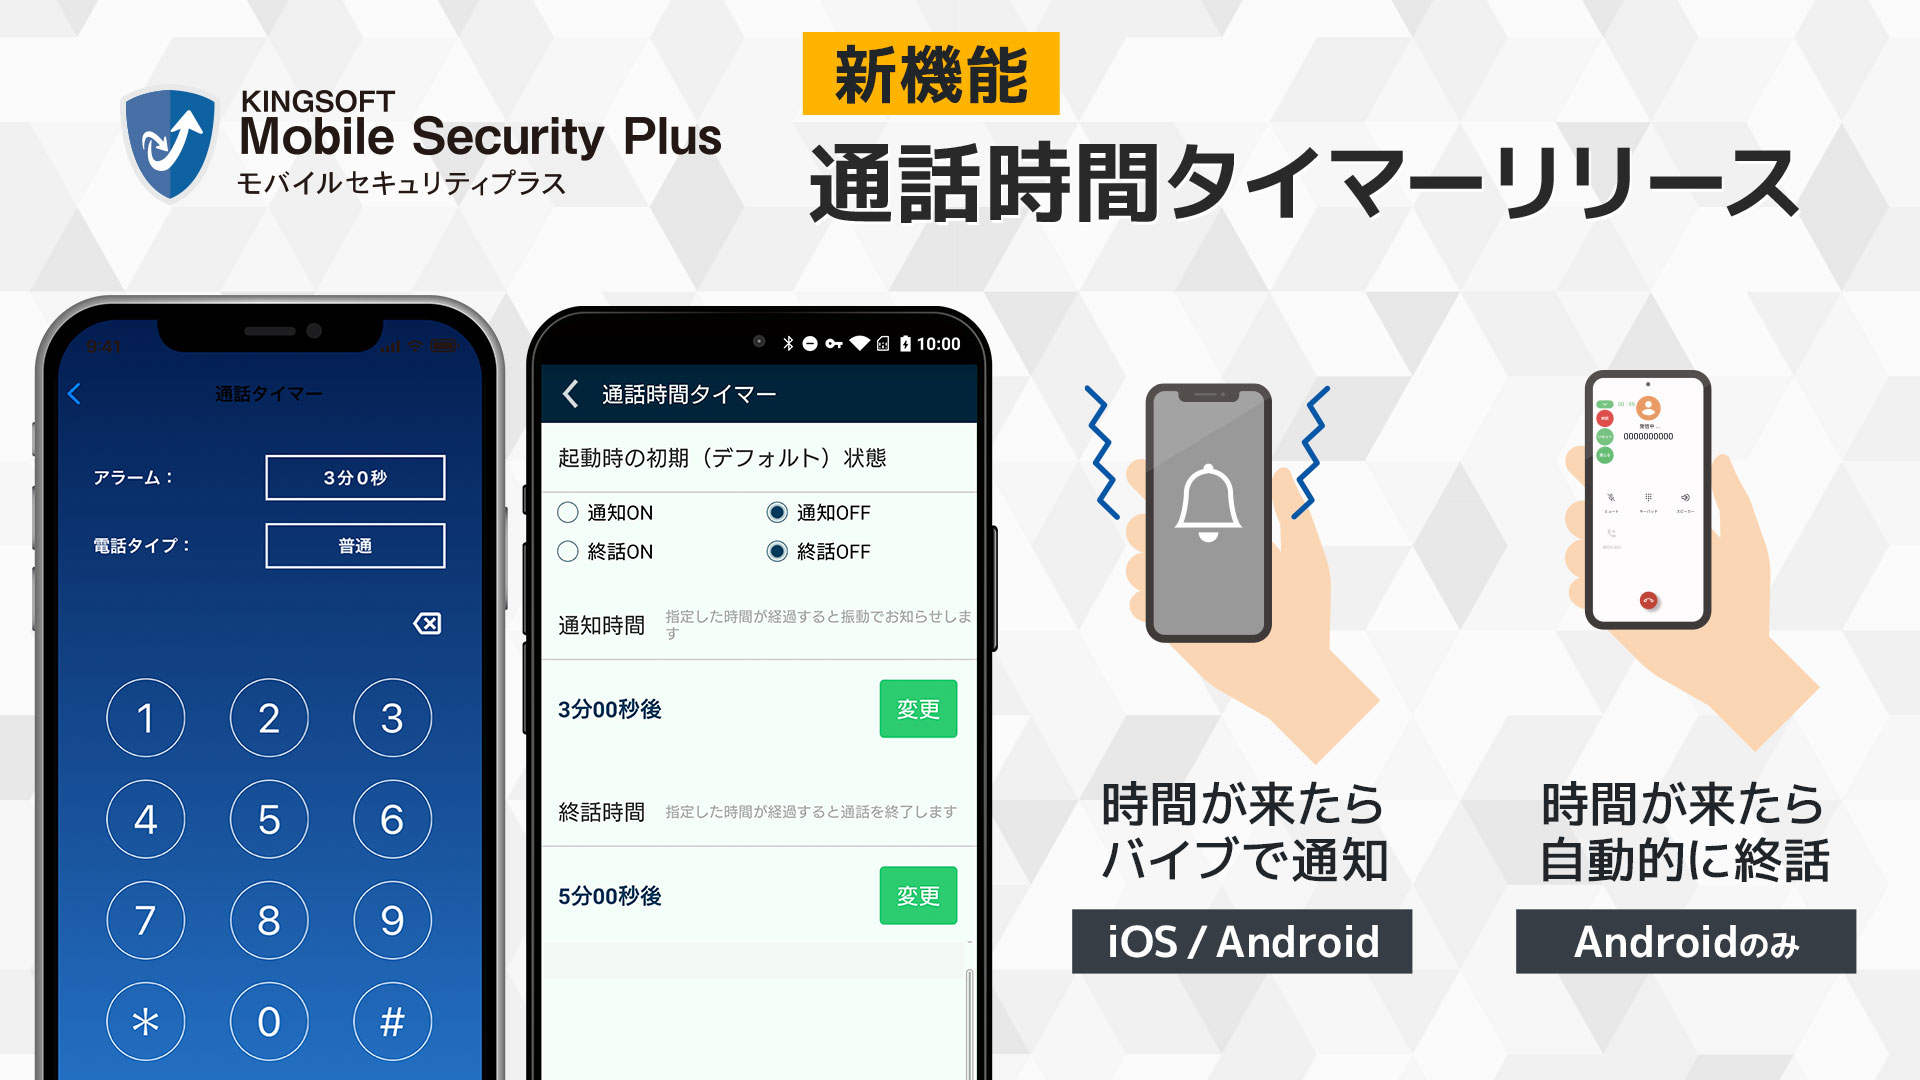 KINGSOFT Mobile Security Plus 新機能「通話時間タイマー」リリース